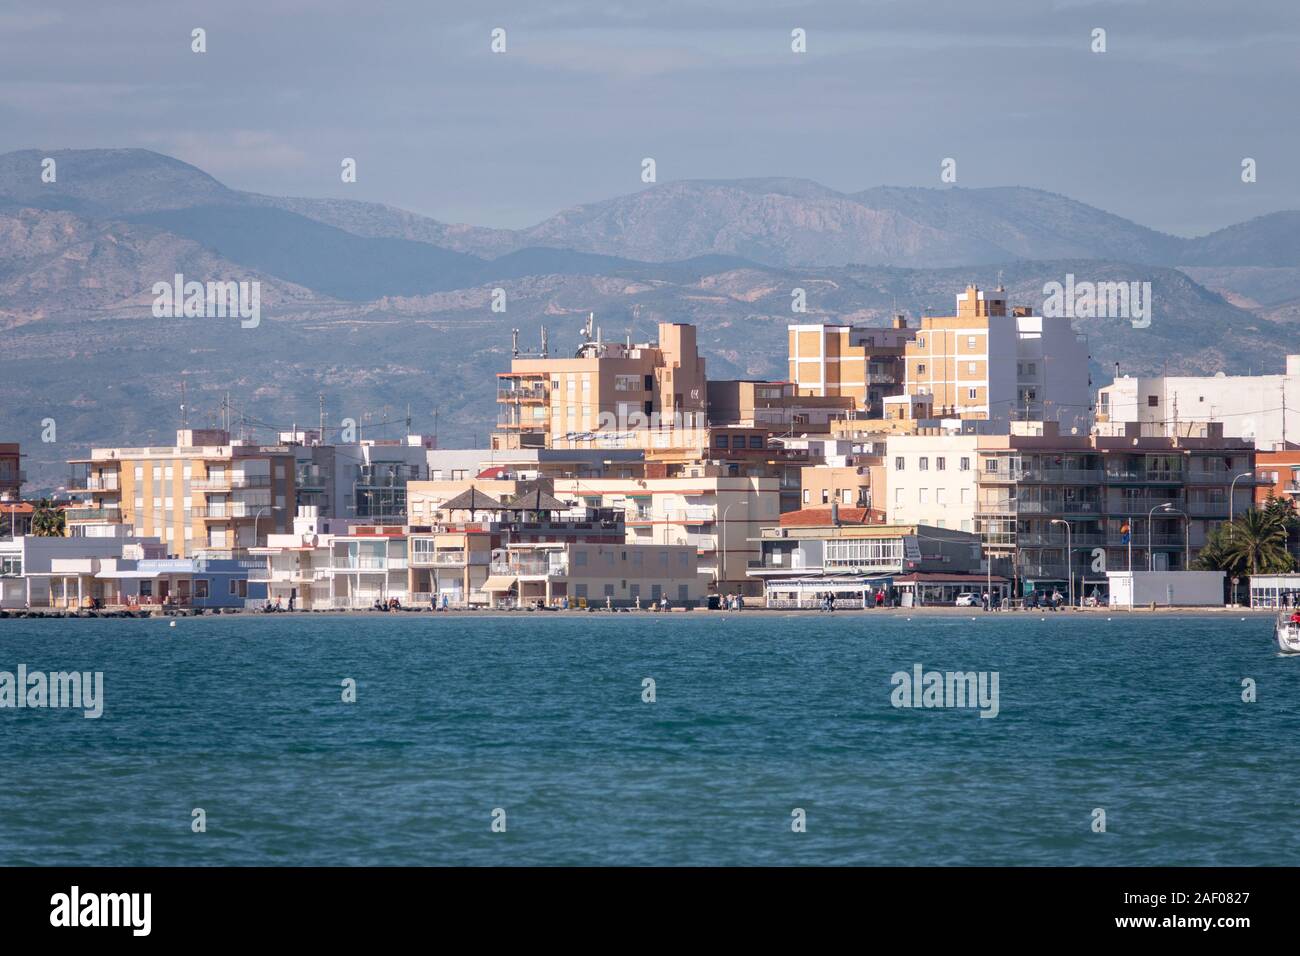 Views of the seaside Spanish resort of Santa Pola, Alicante, Spain taken across the harbour with heat haze distortion Stock Photo